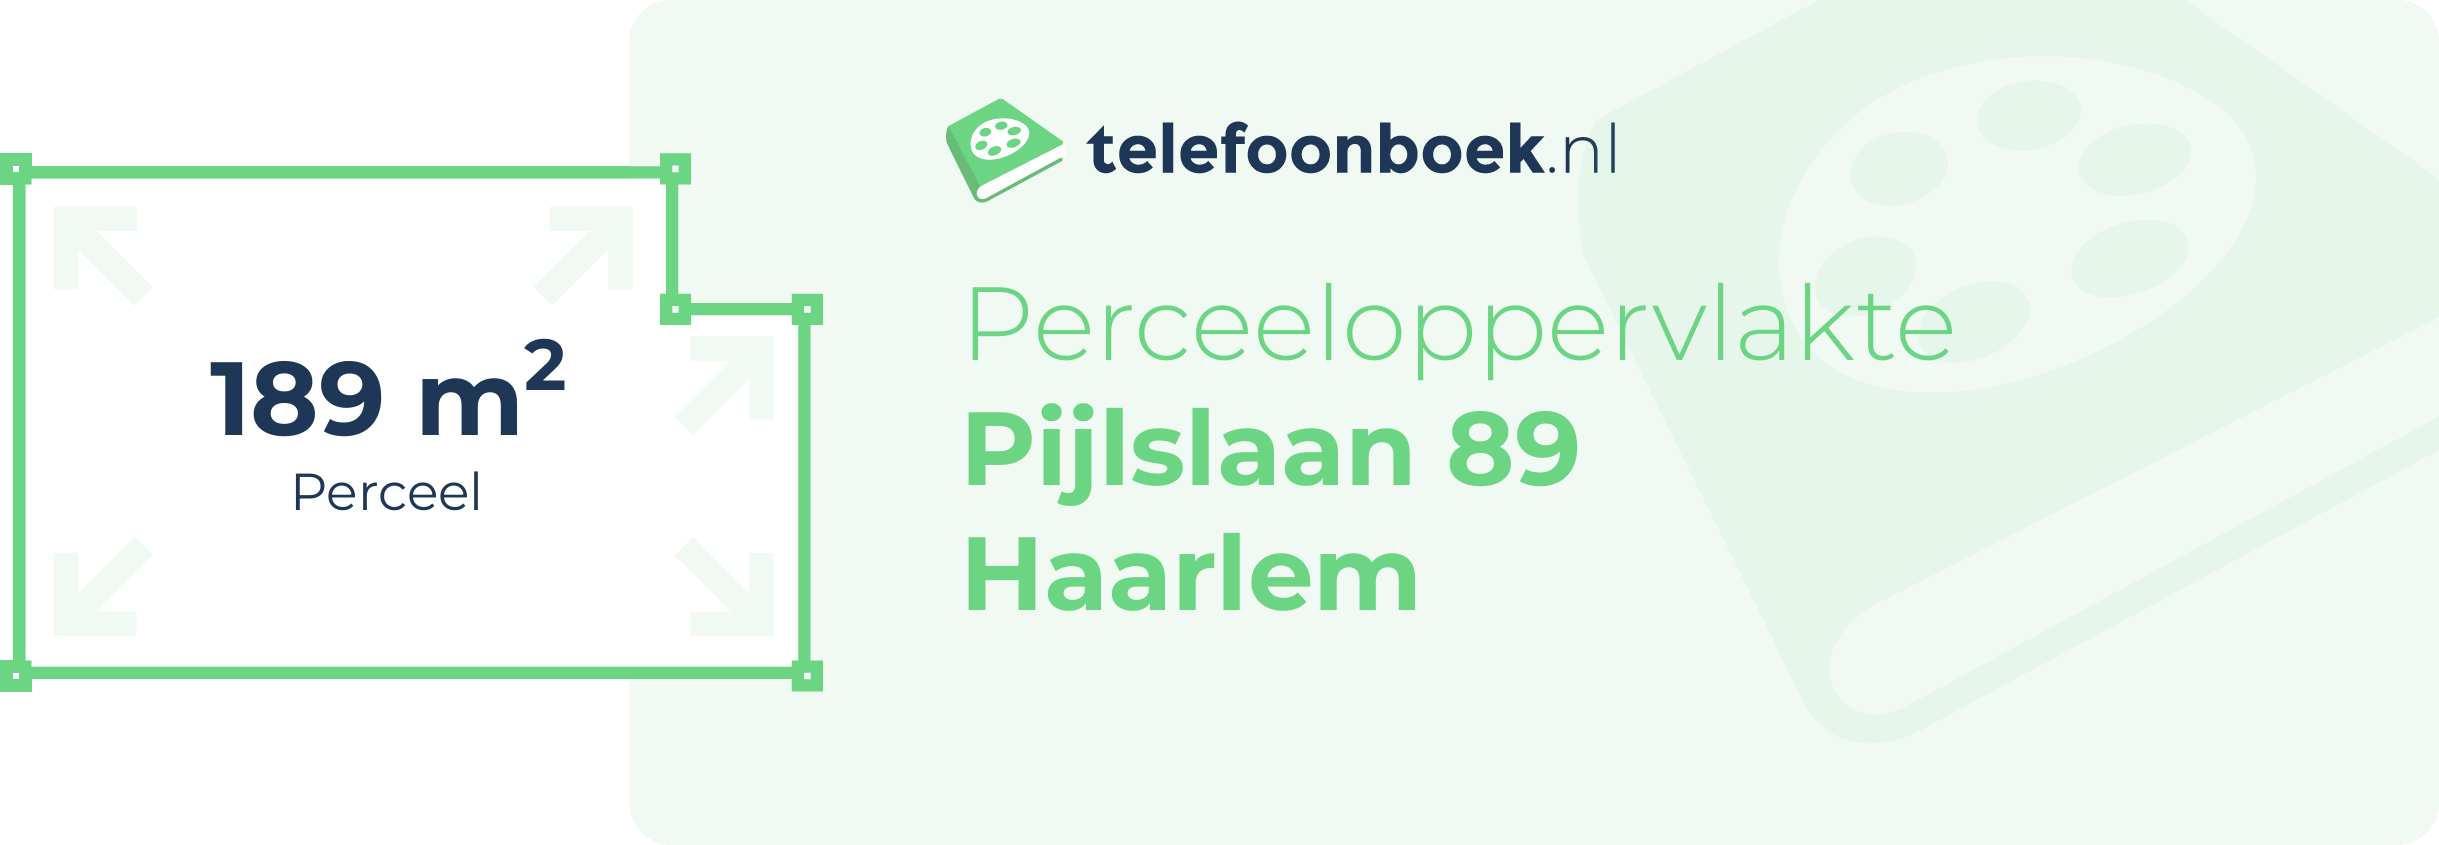 Perceeloppervlakte Pijlslaan 89 Haarlem